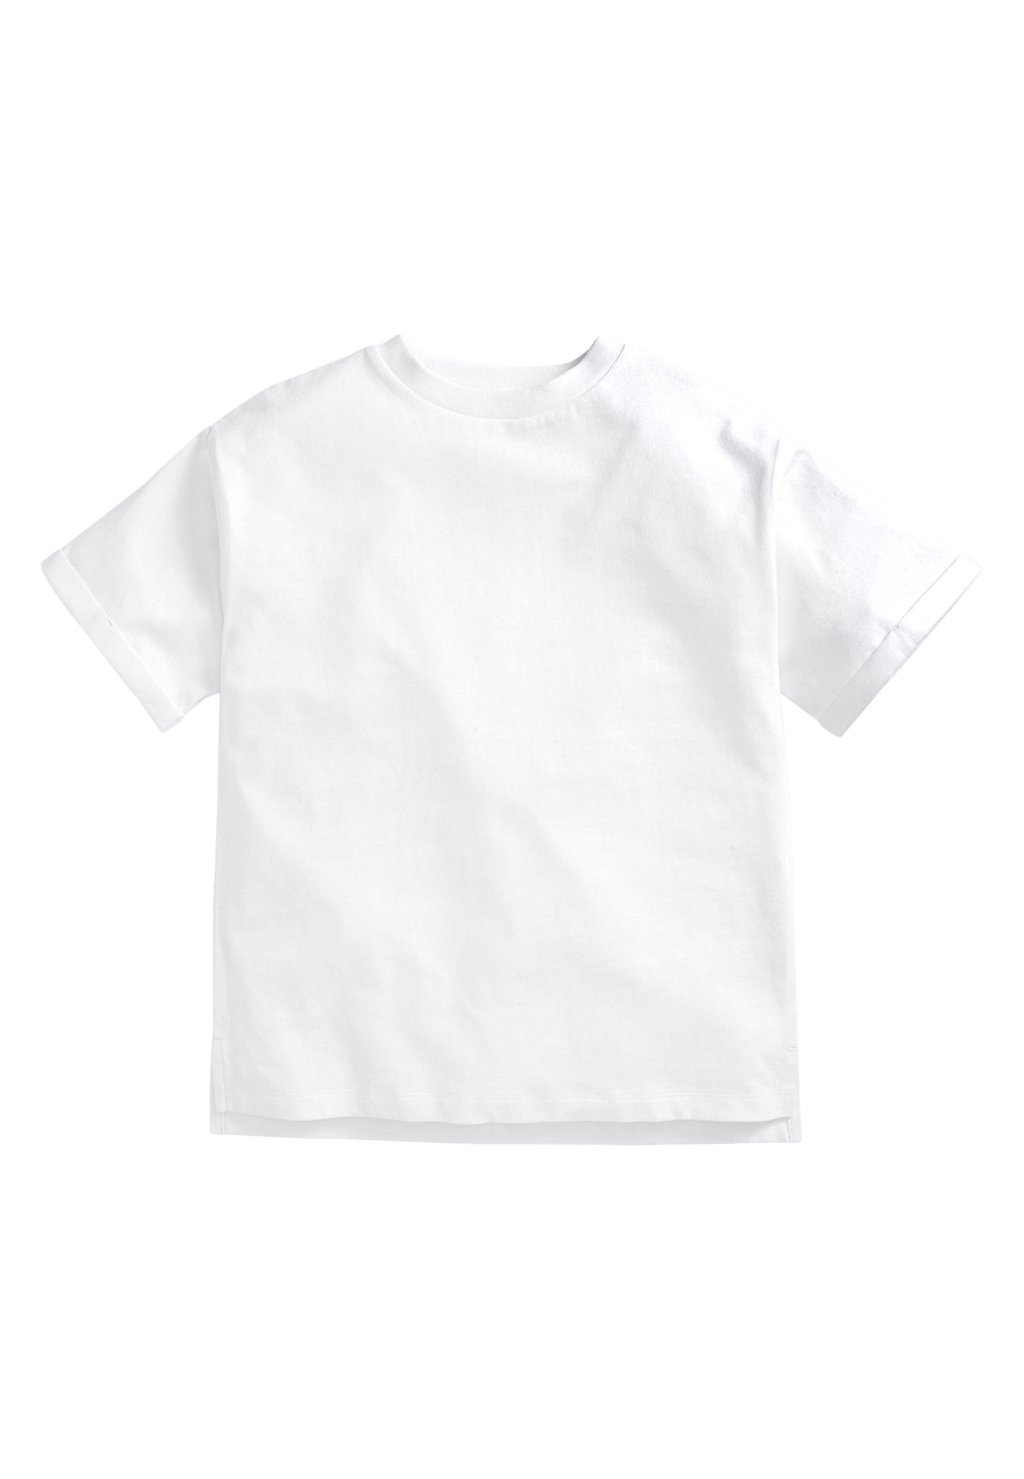 Базовая футболка Next, белая